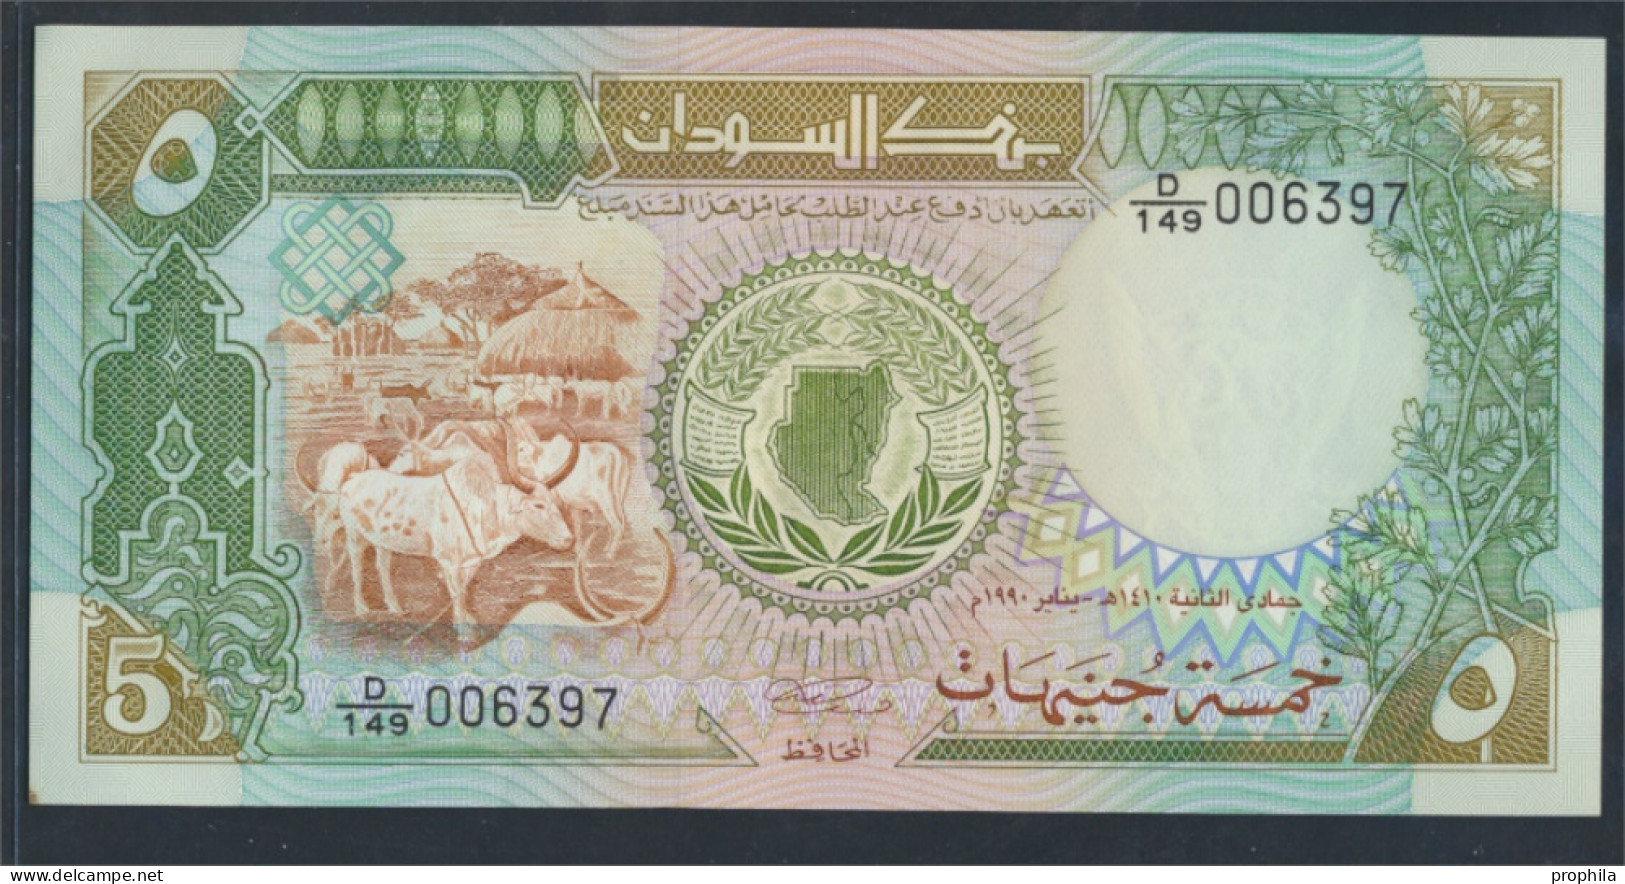 Sudan Pick-Nr: 40c Bankfrisch 1990 5 Pounds (9855658 - Soedan